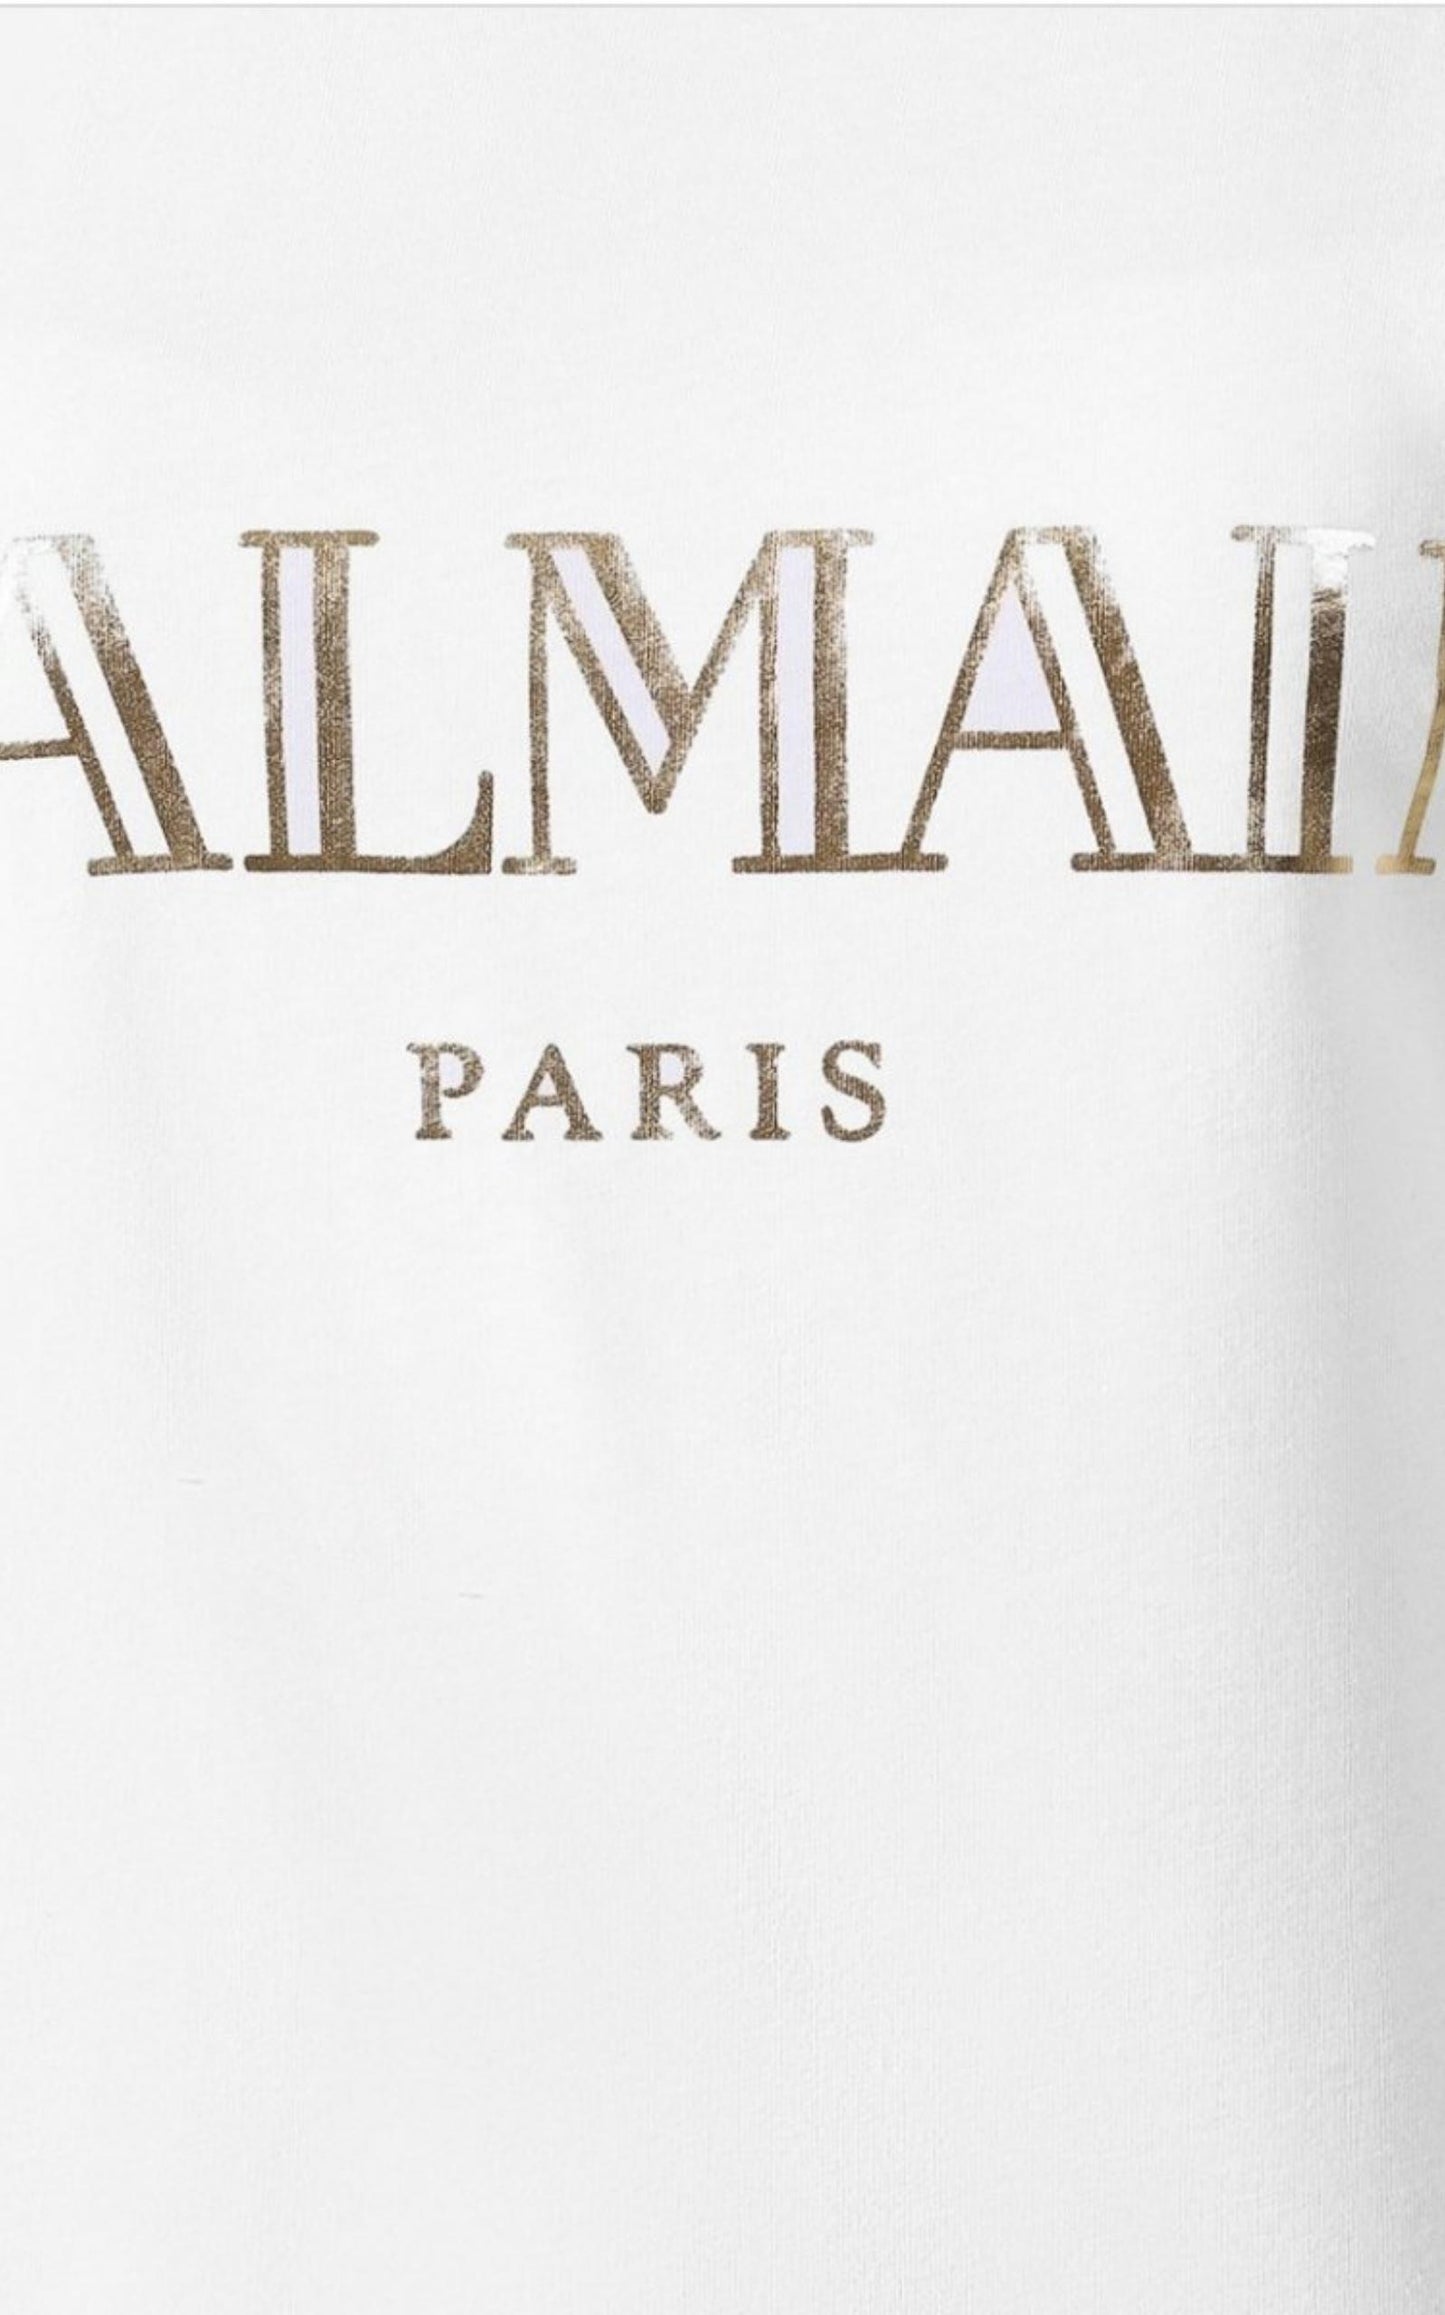  BalmainPrinted Logo Sleeveless T-shirt - Runway Catalog